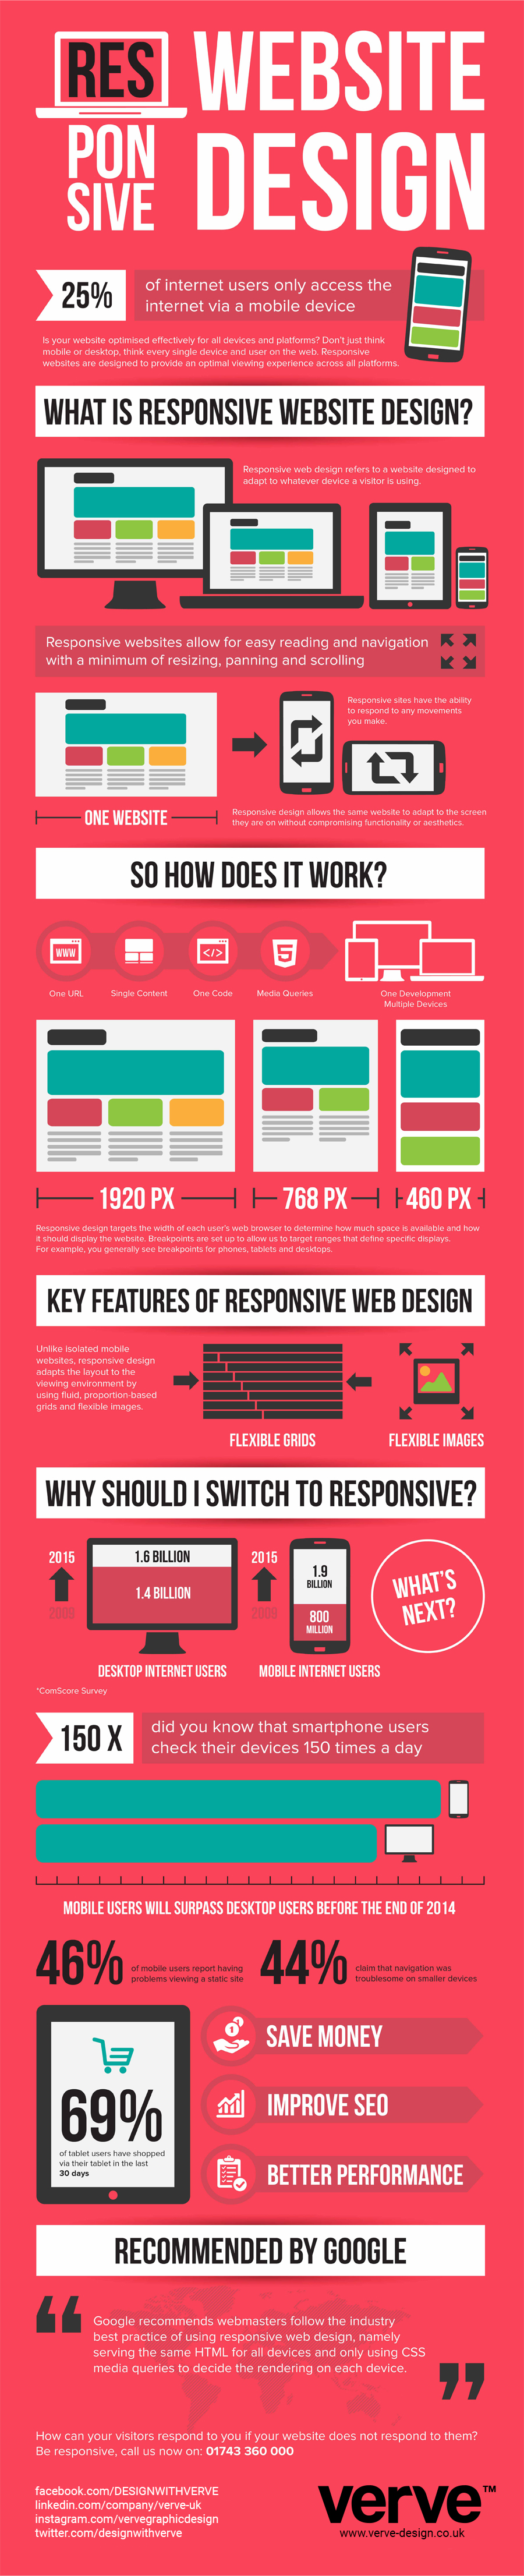 Key Benefits of Responsive Web Design